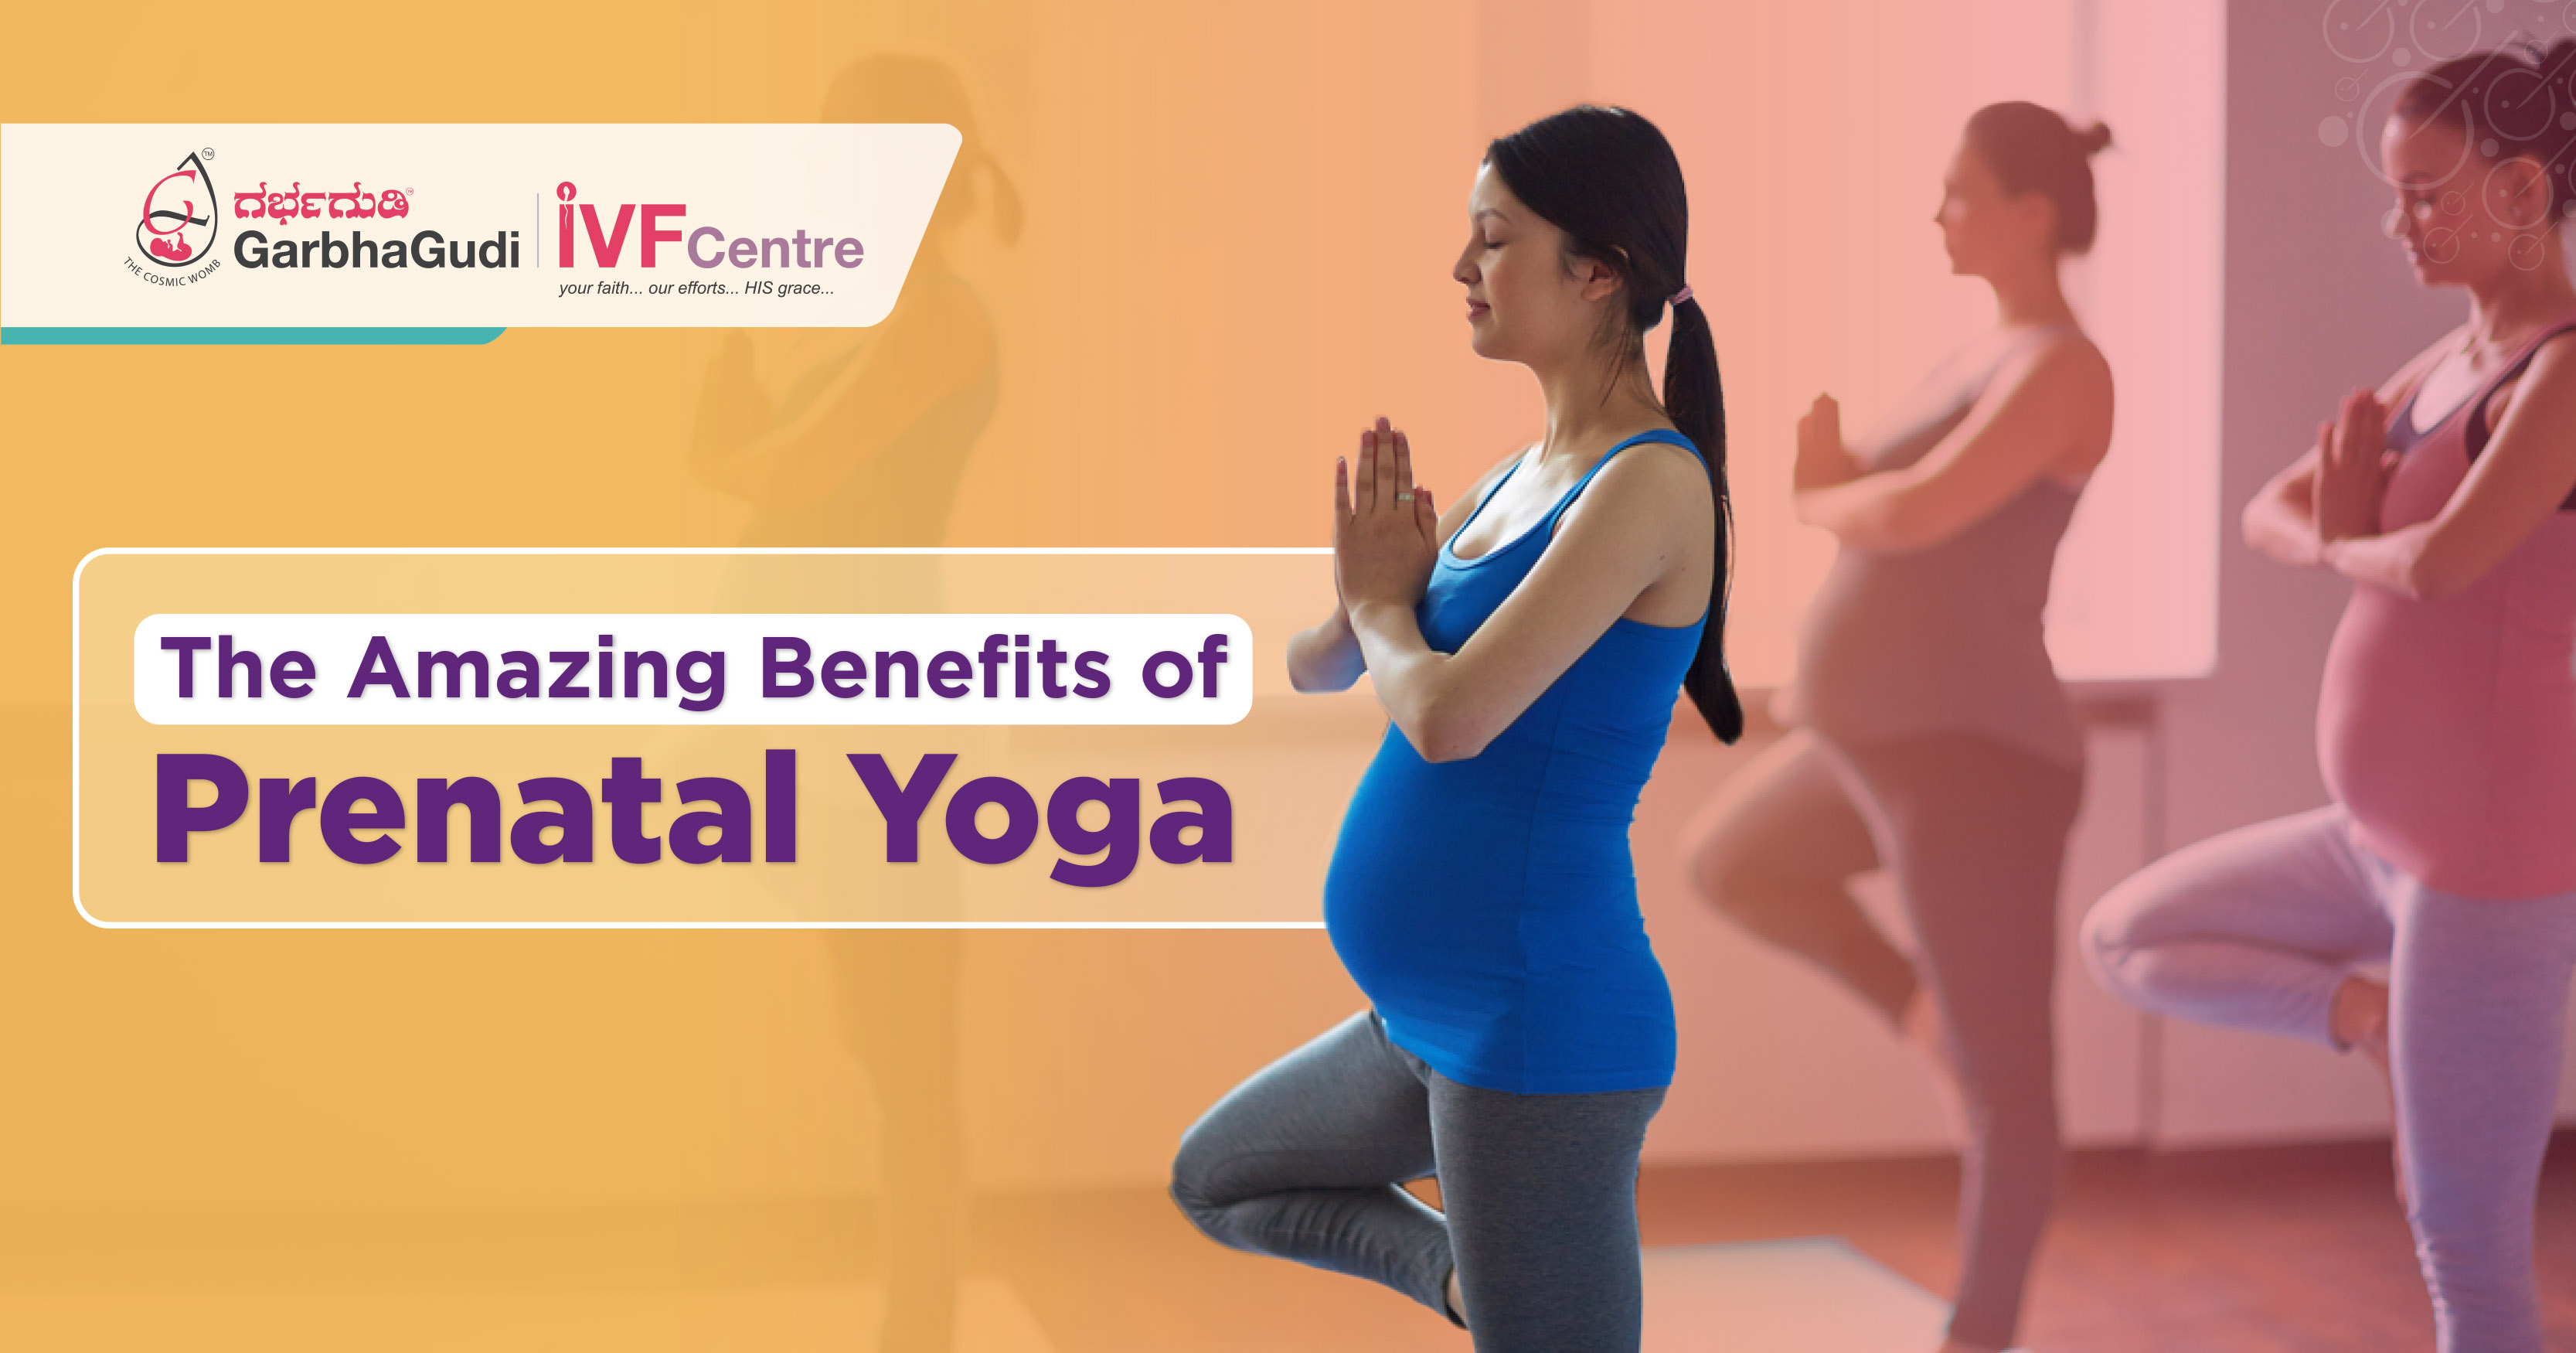 The Amazing Benefits of Prenatal Yoga